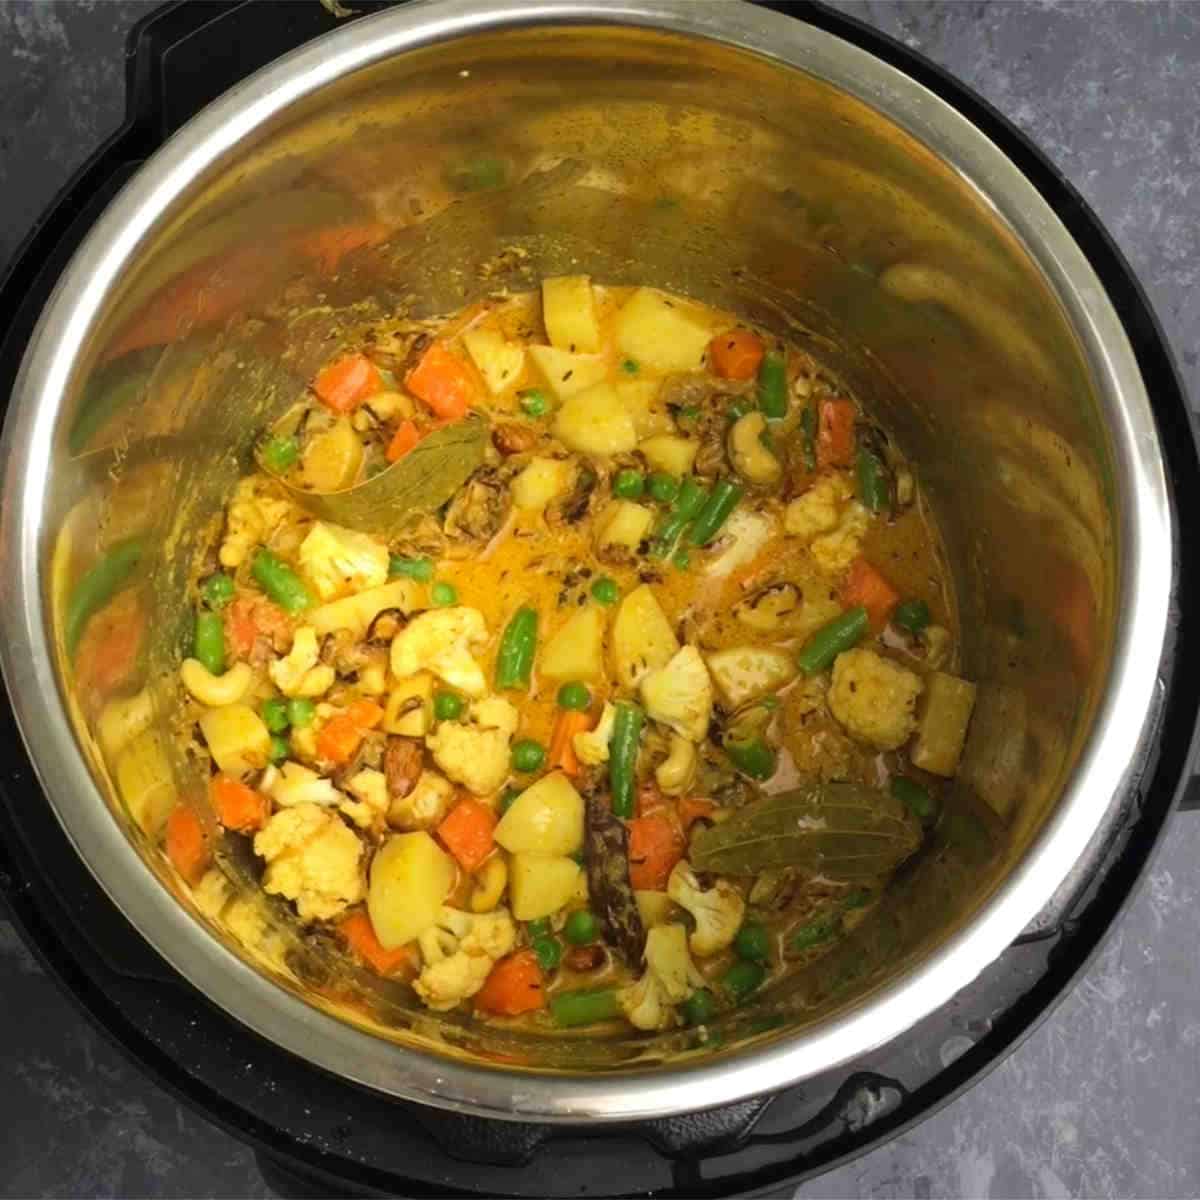 Add veggies, yogurt, and spread evenly in the pot.